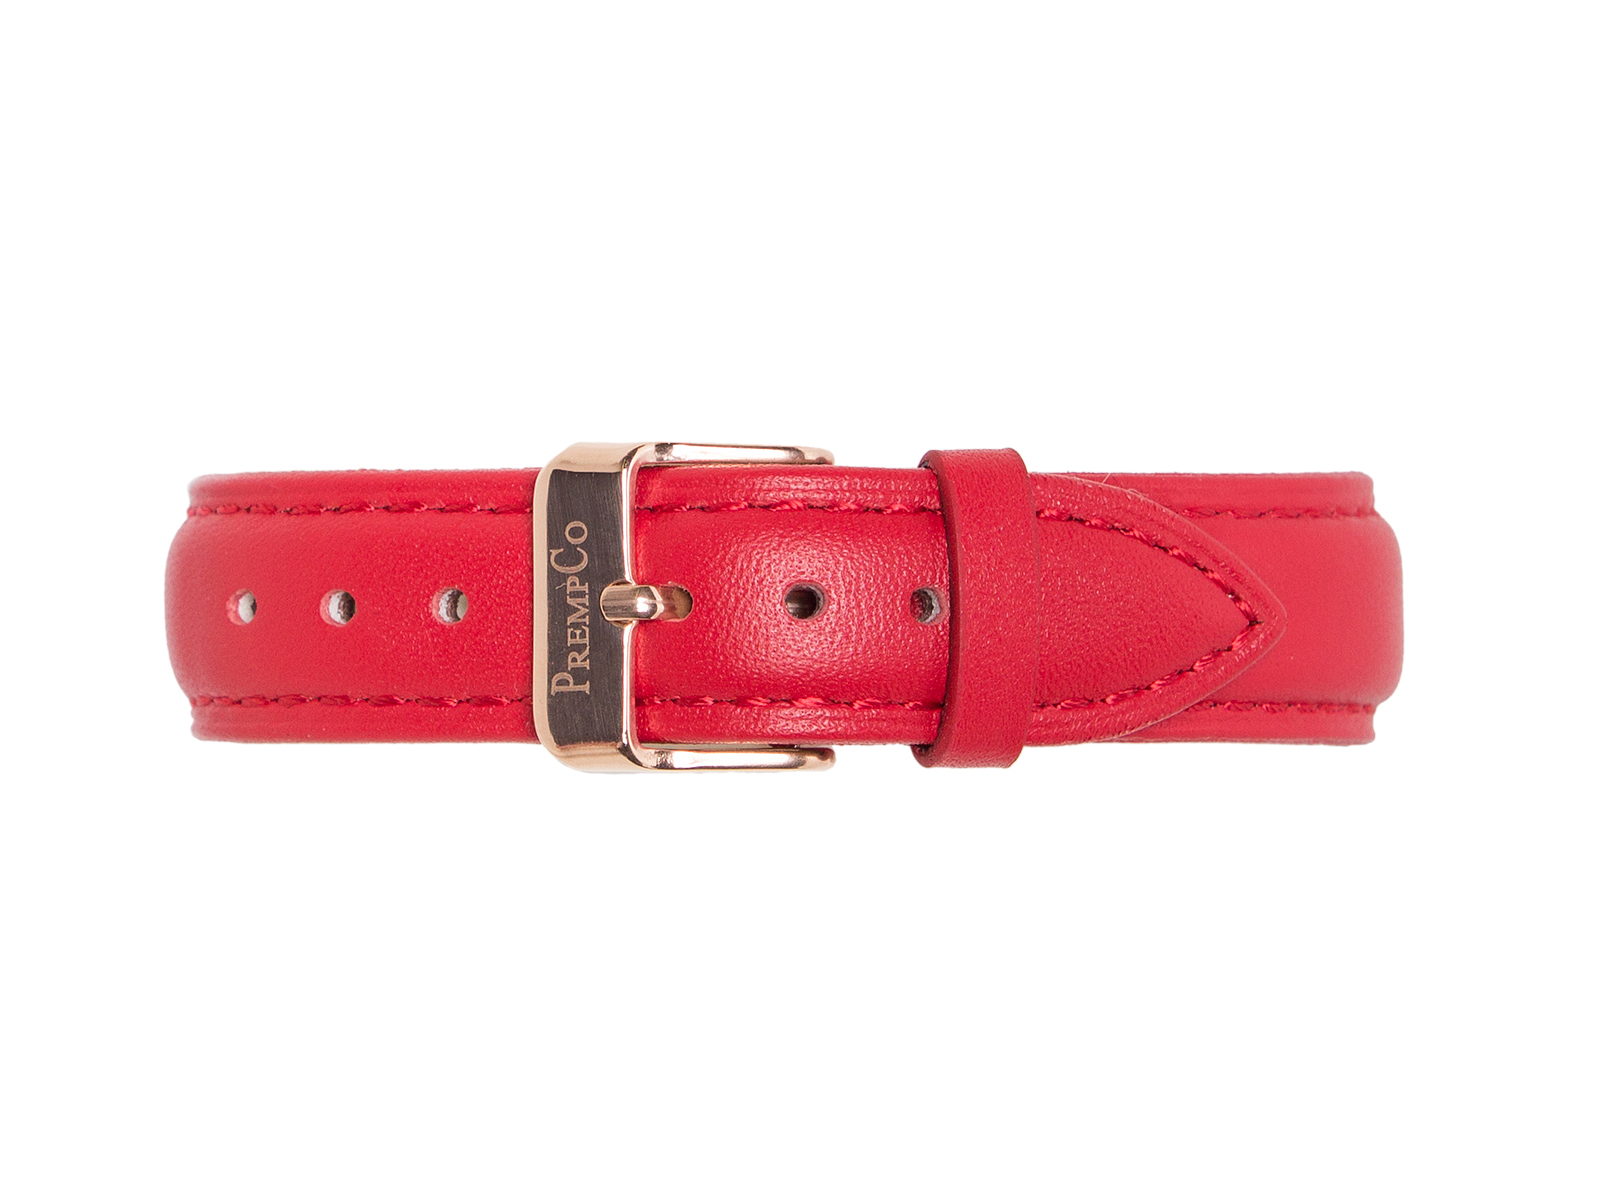 Rotes Schnellwechselband PrempCo Leder Uhrenband Uhrenarmband Schnellwechseluhrenband schnellwechseluhrenarmband